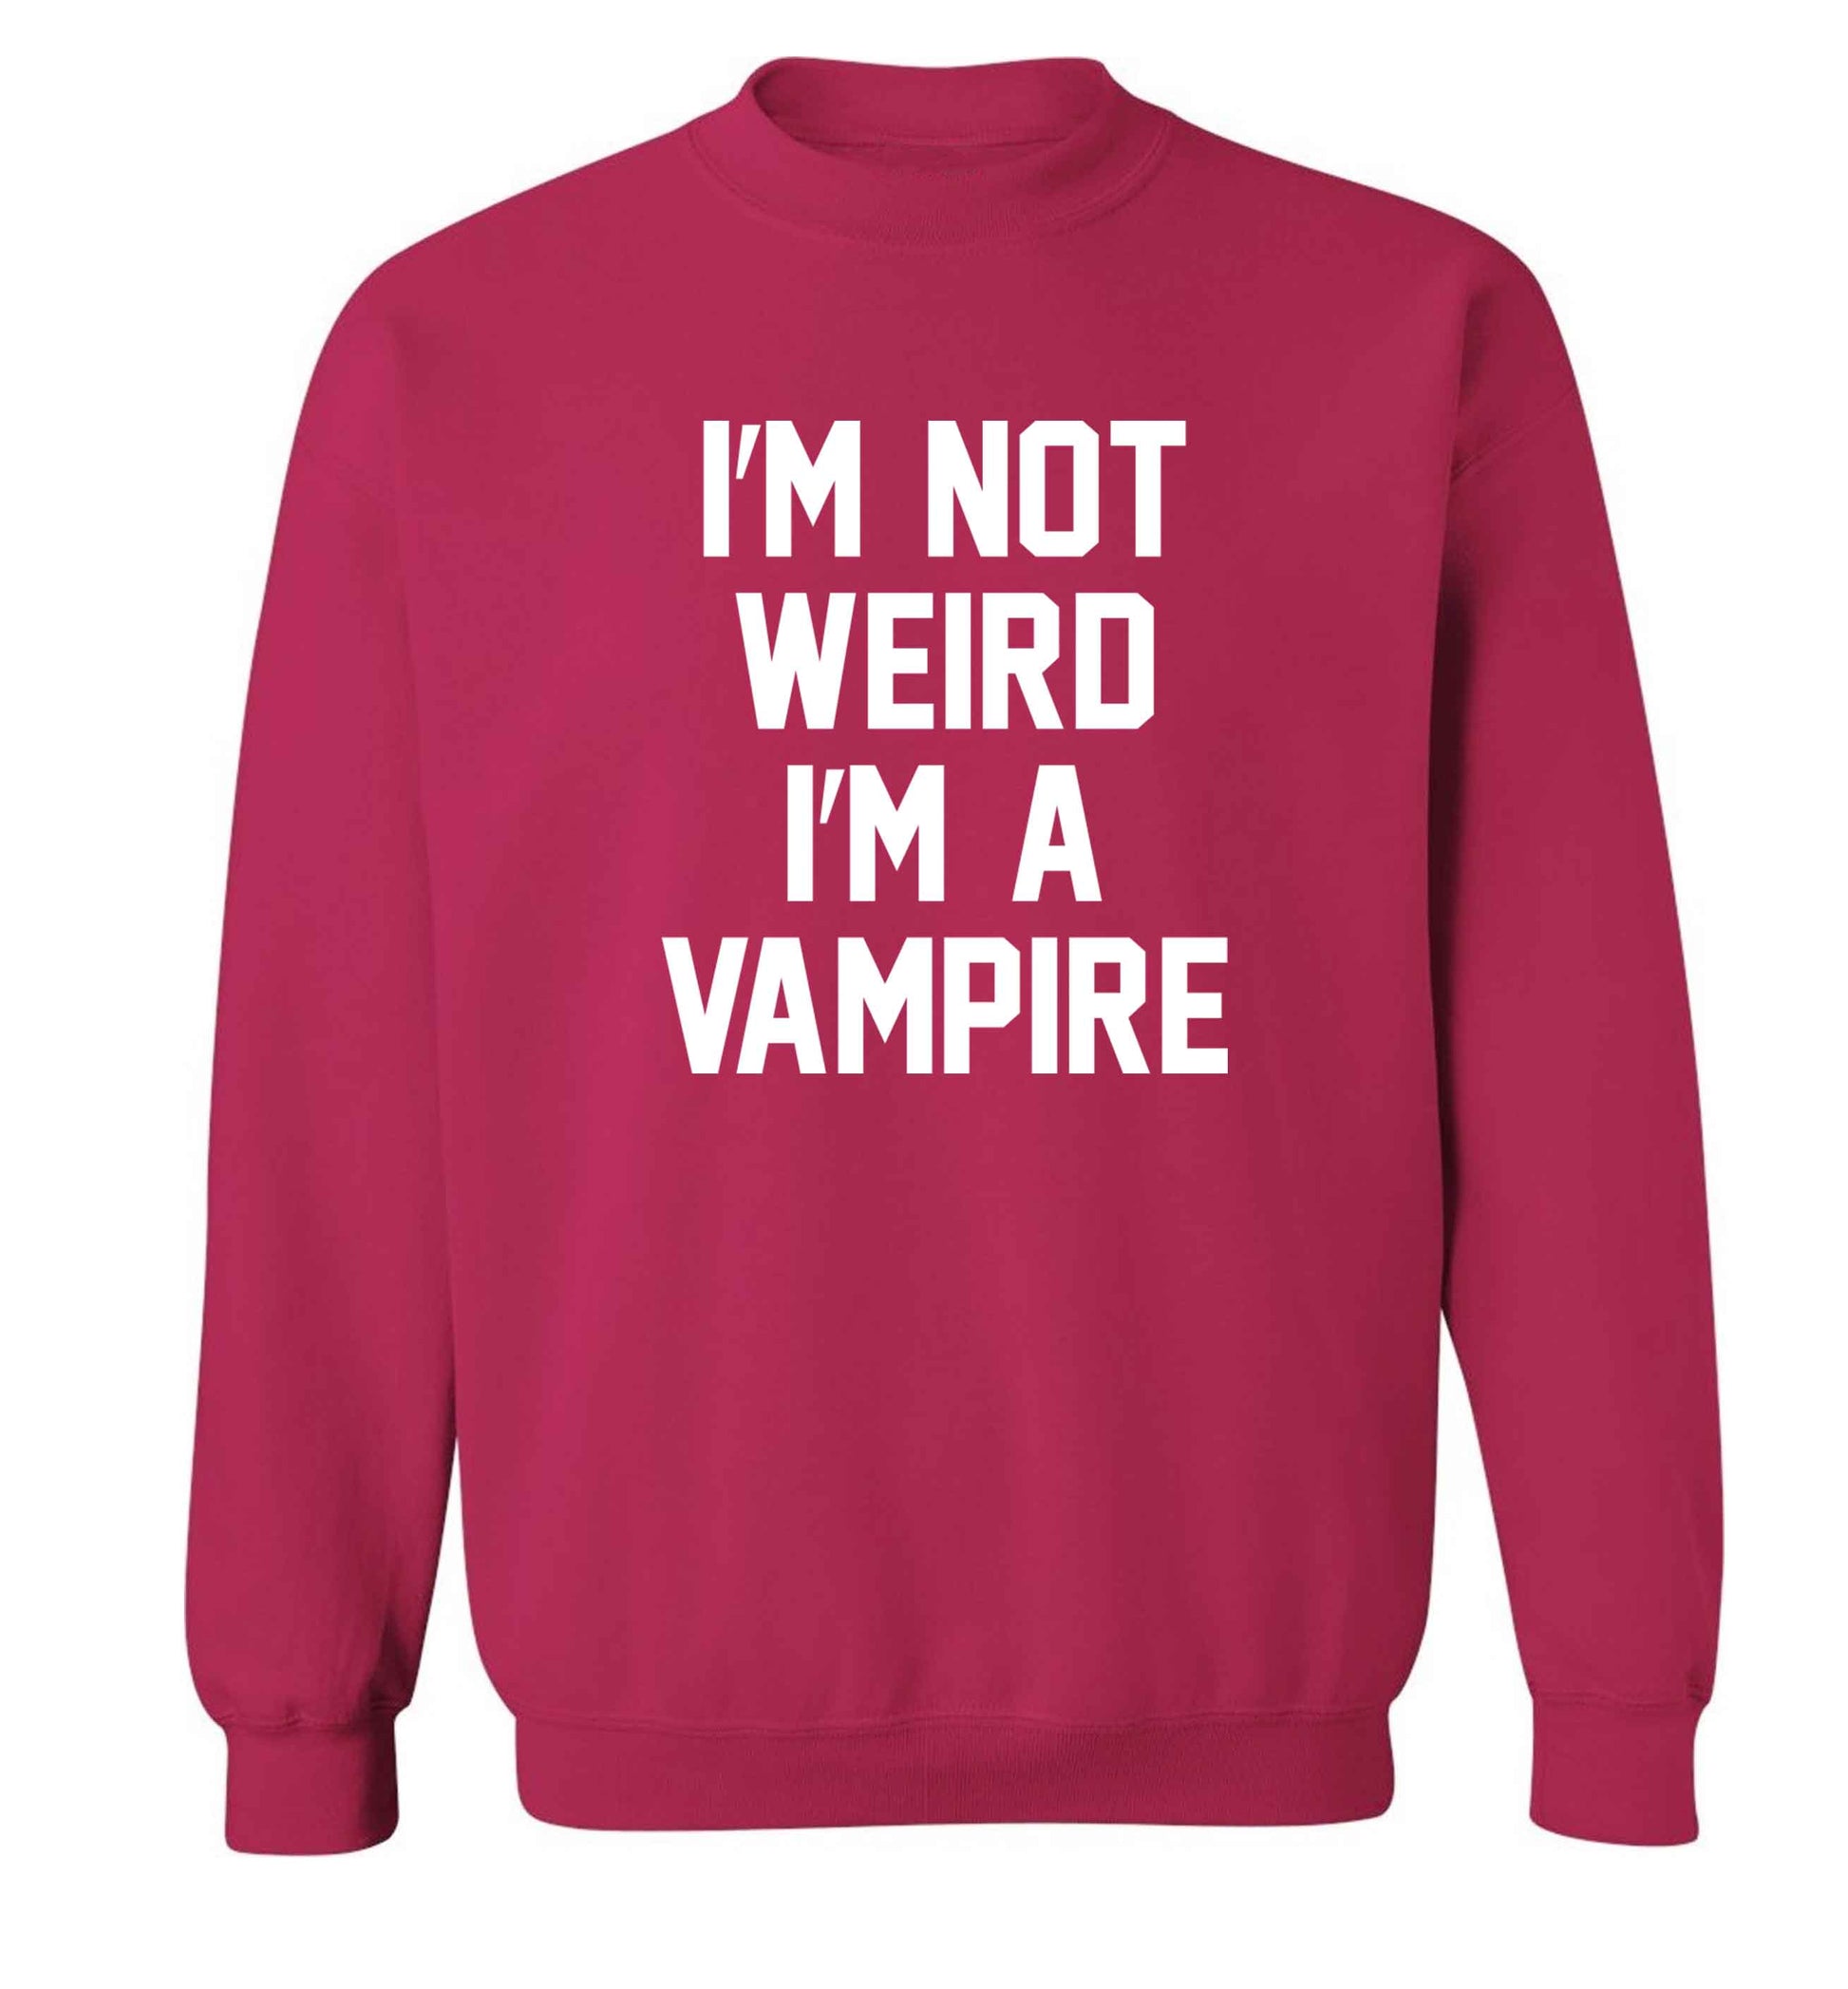 I'm not weird I'm a vampire adult's unisex pink sweater 2XL